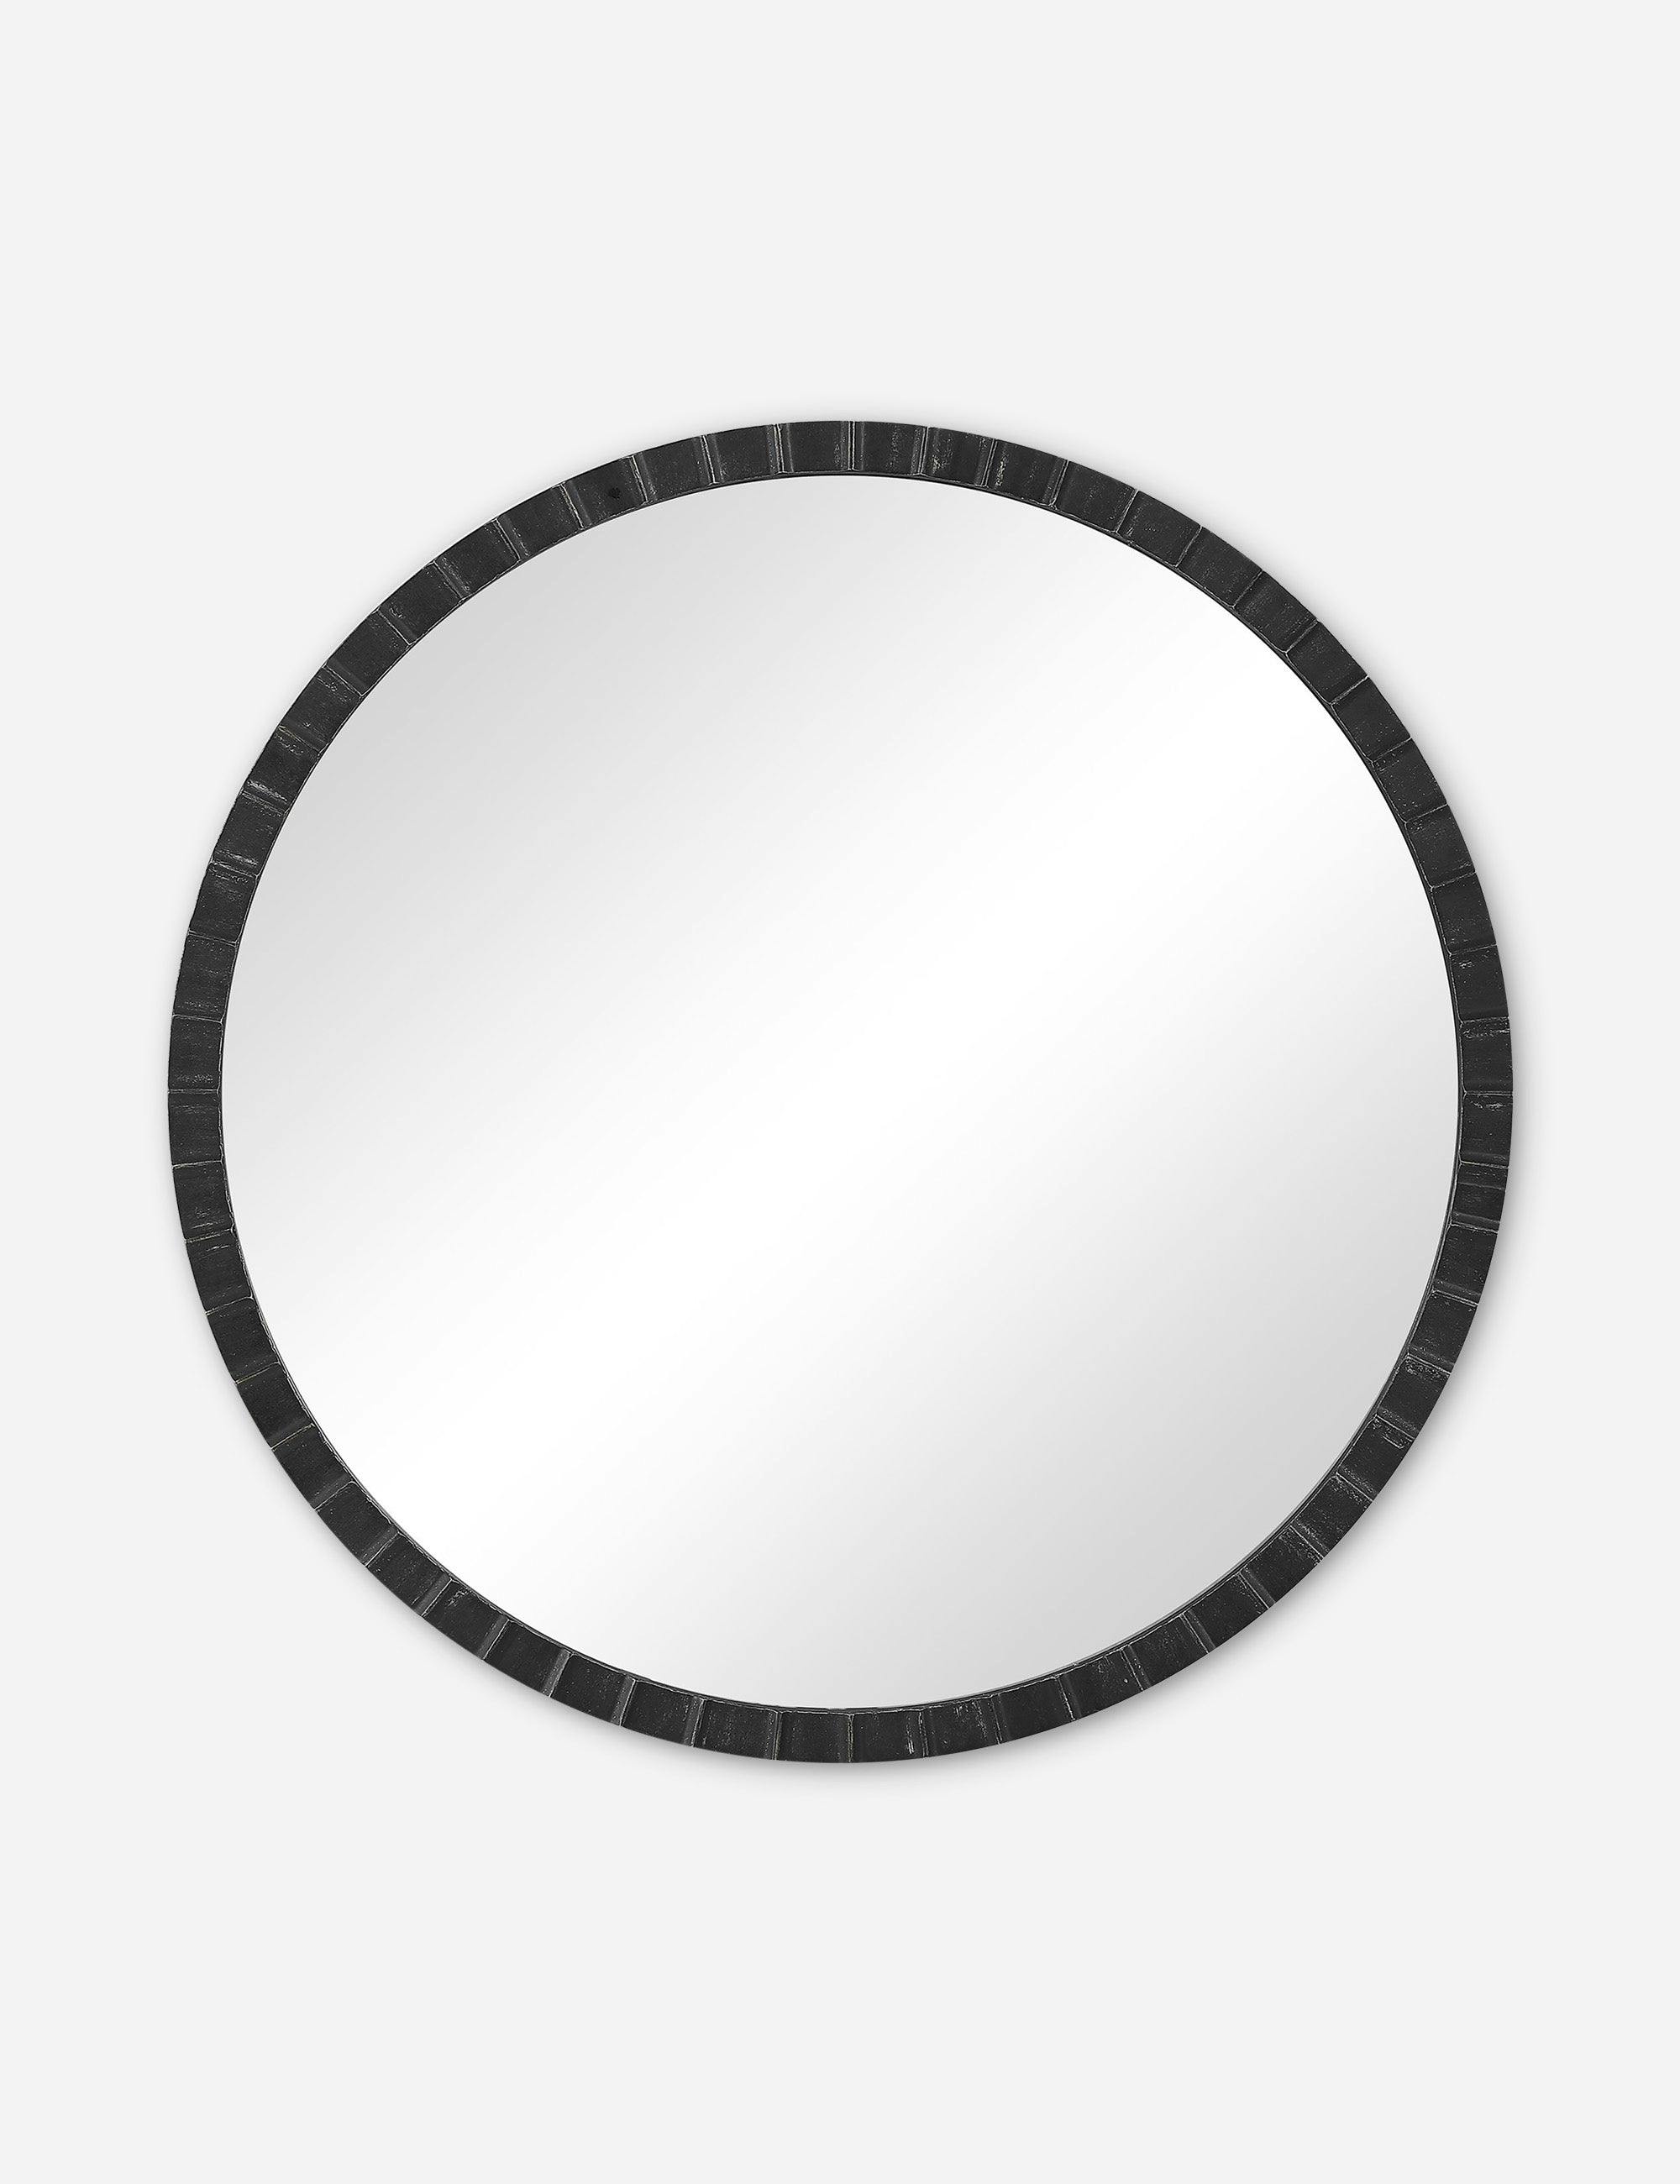 Dandridge 34" Distressed Black and Silver Industrial Round Mirror